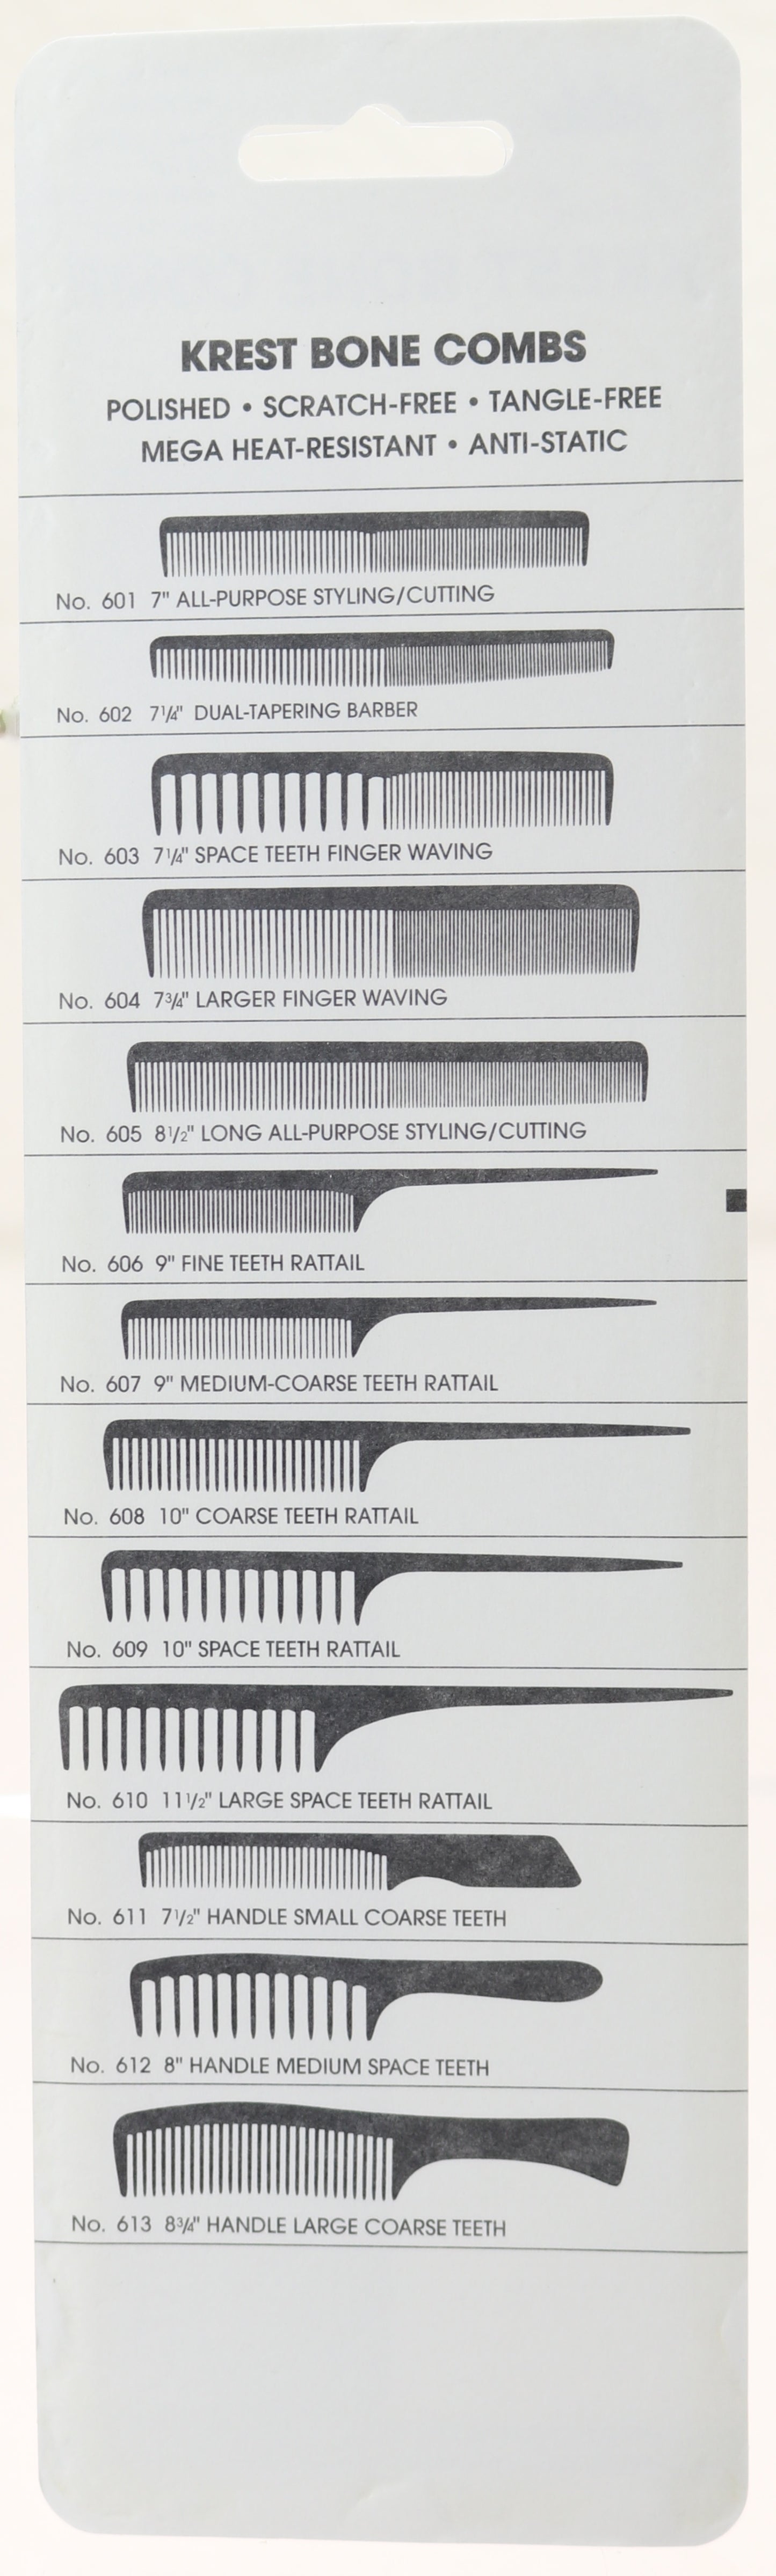 Krest Bone Comb 8-1/2 In. Heat Resistant Comb. Stylist Combs. Flat Iron Comb